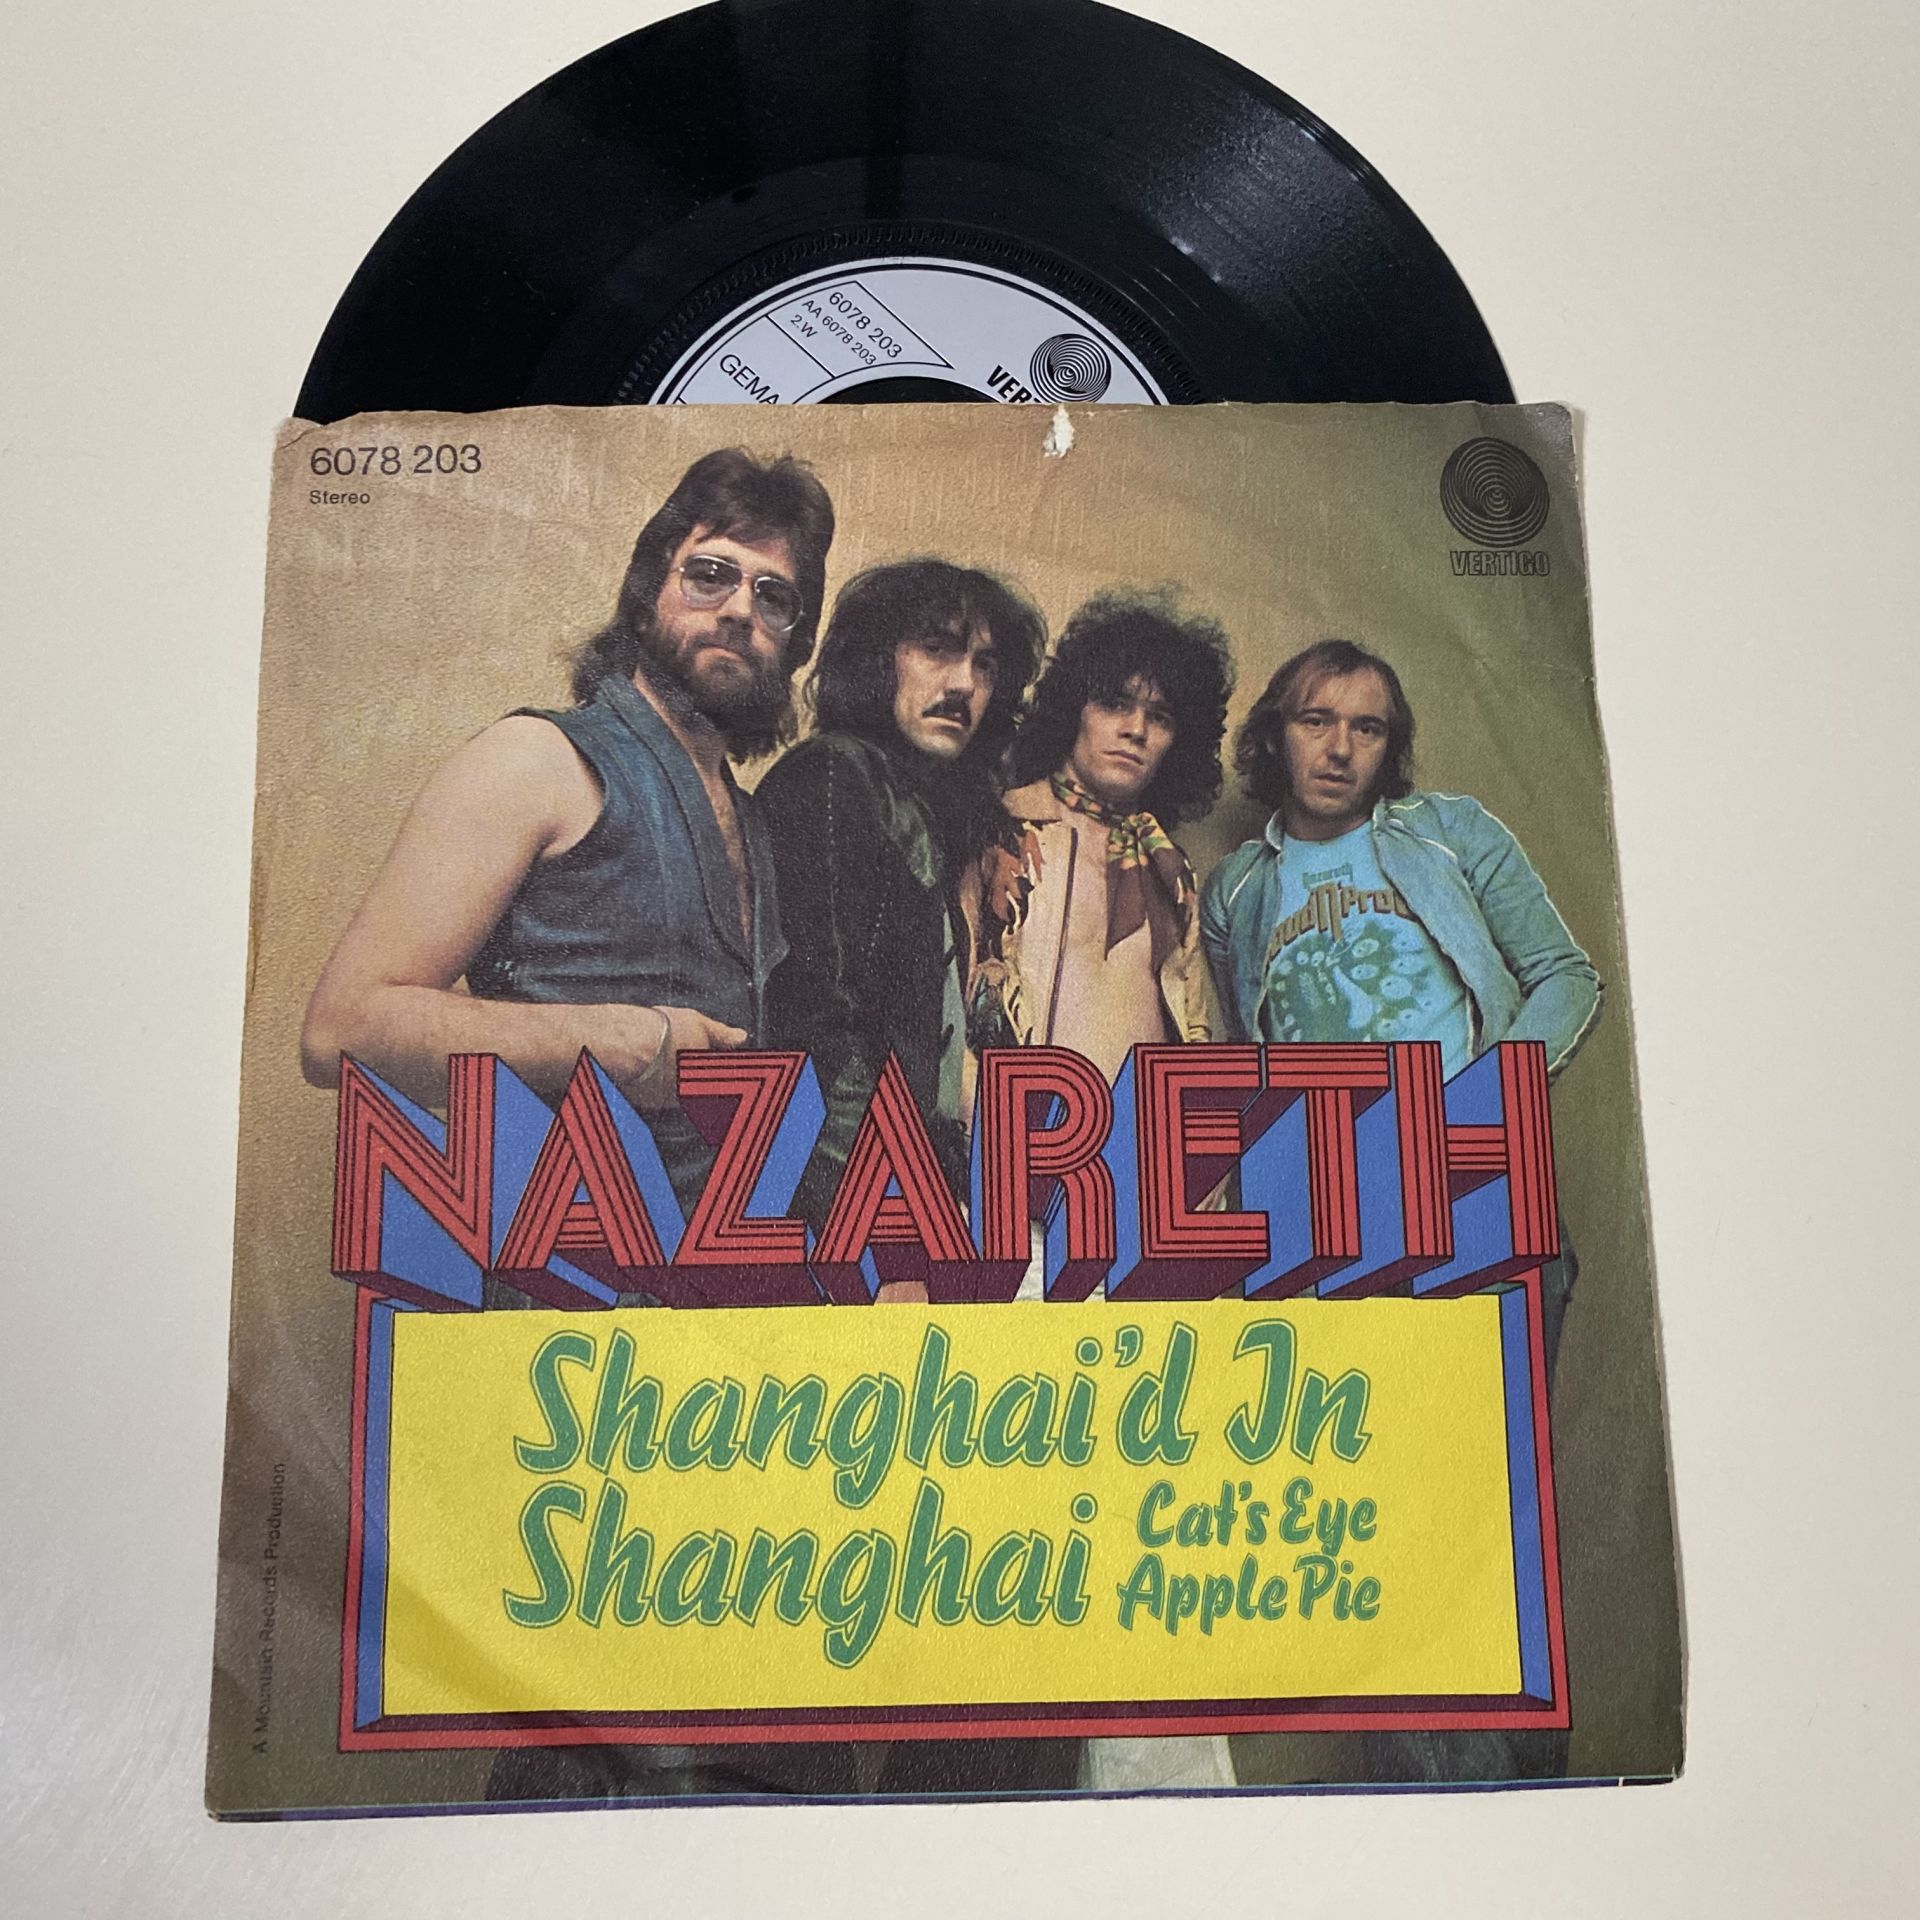 Nazareth – Shanghai'd In Shanghai